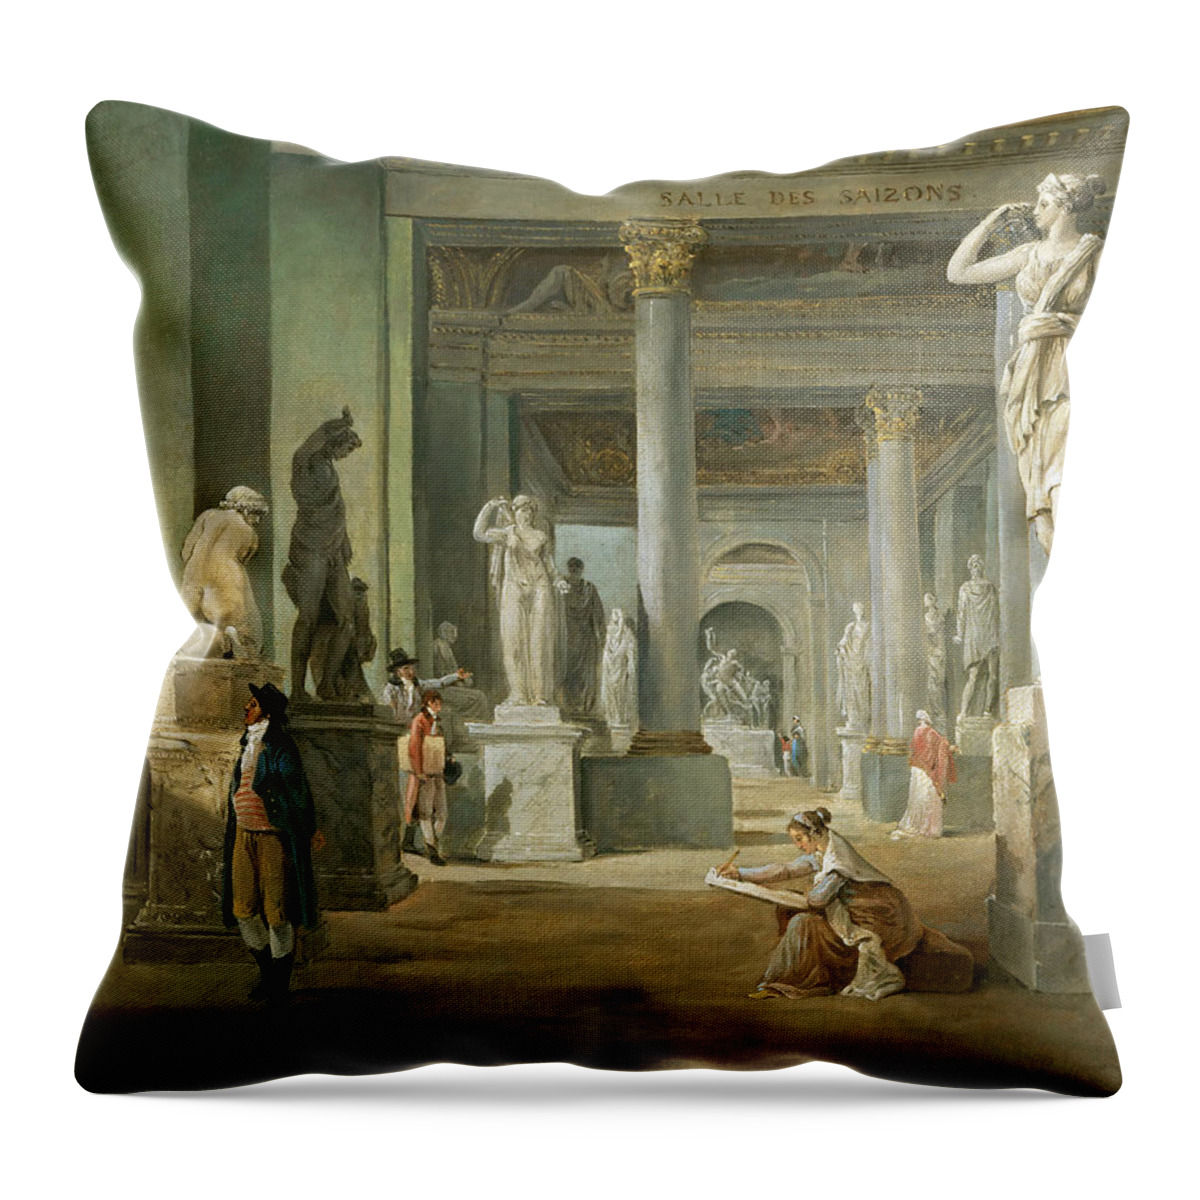 Hubert Robert Throw Pillow featuring the painting Hall of Seasons at the Louvre by Hubert Robert